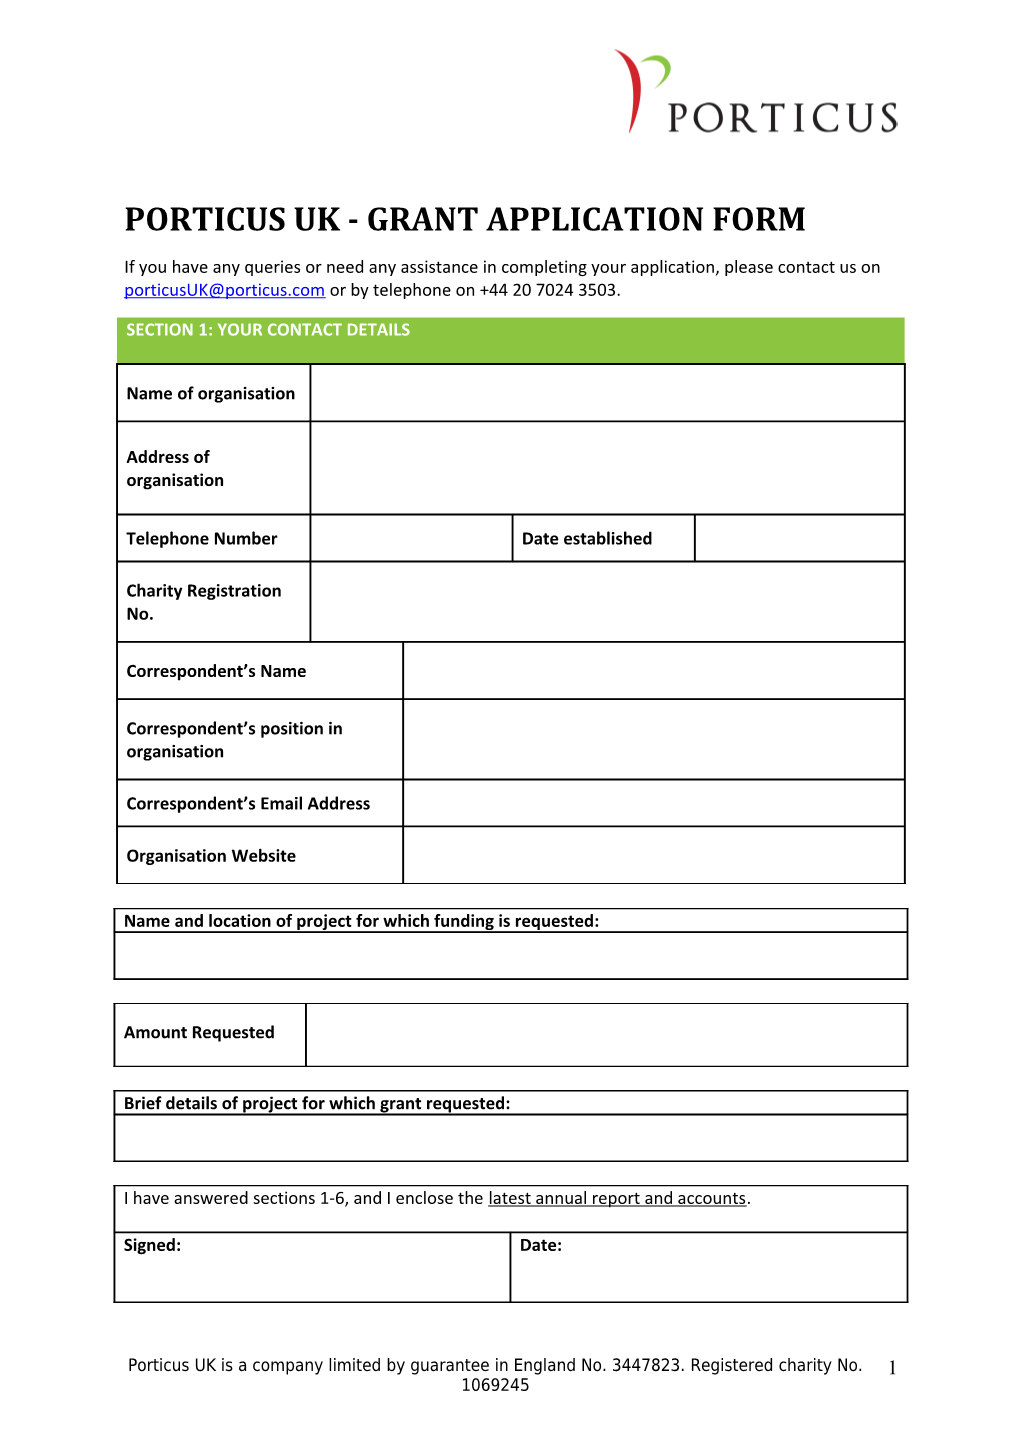 PORTICUS UK-Grant Application Form